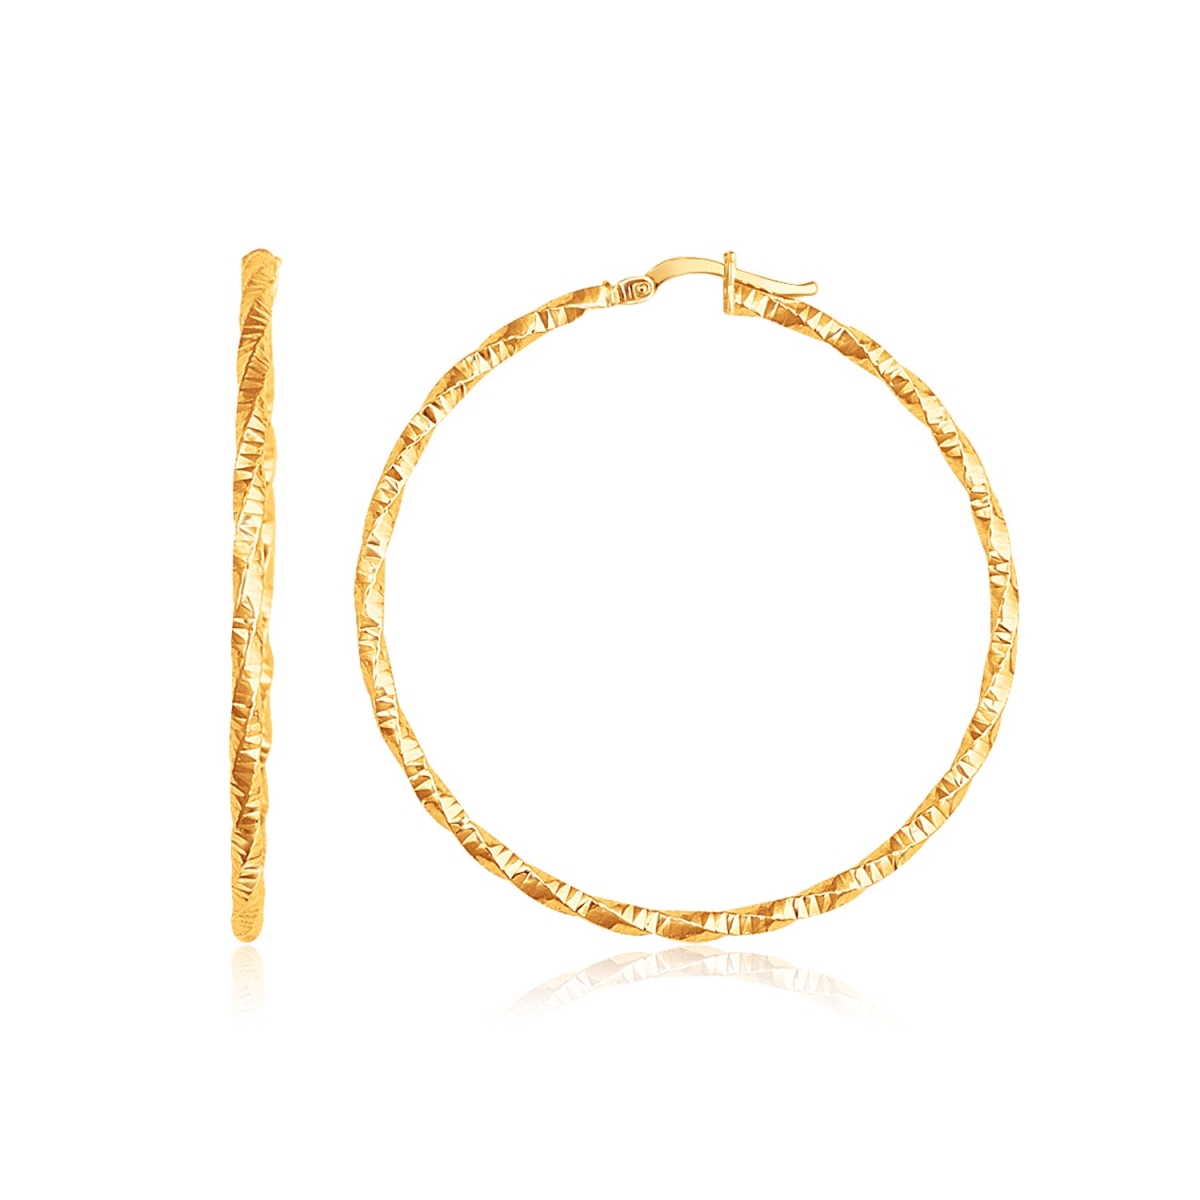 D165952 14k Yellow Gold Patterned Hoop Earrings With Twist Design